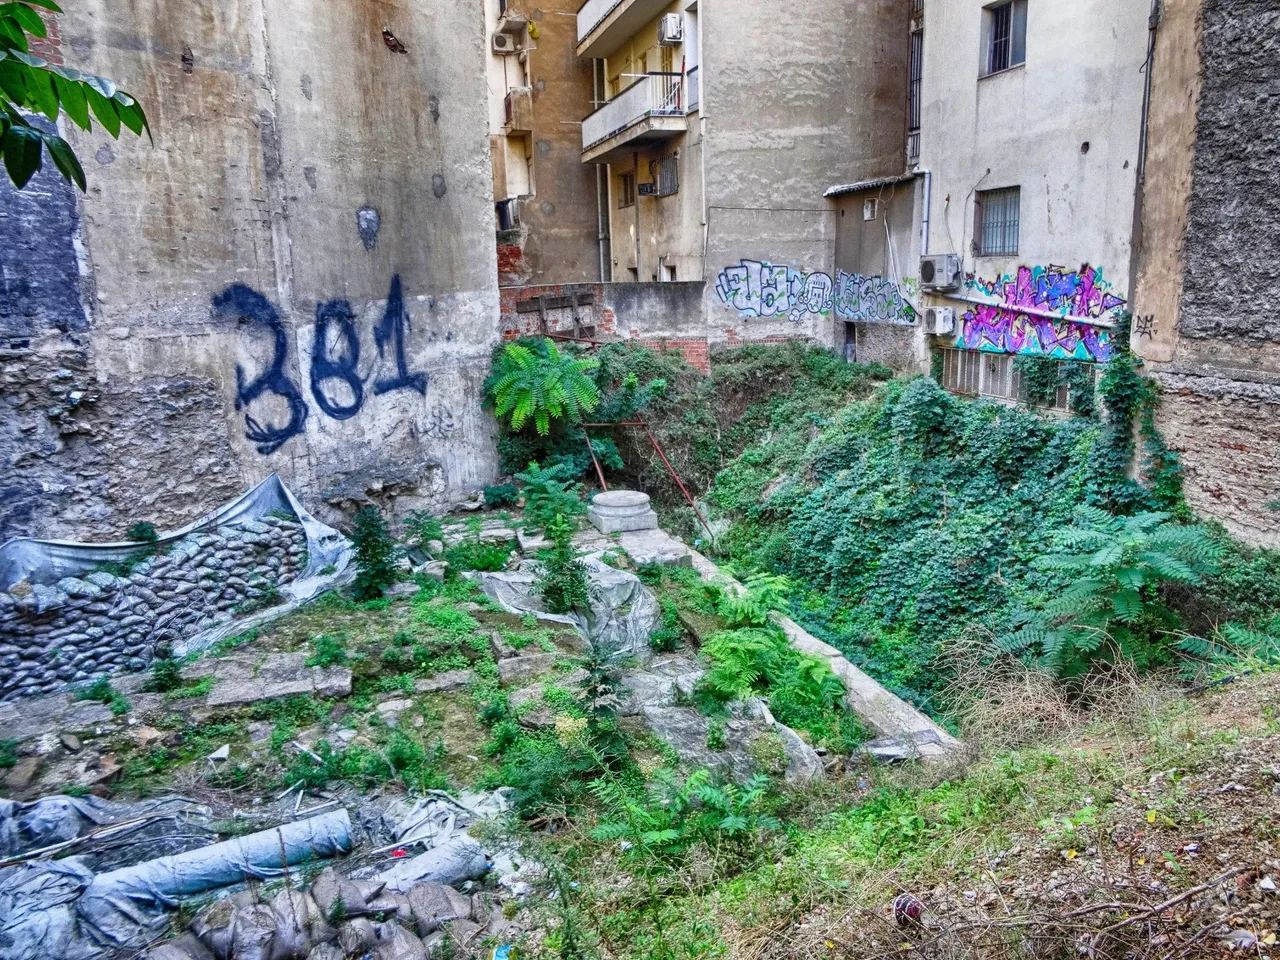 The backyard of a ruin